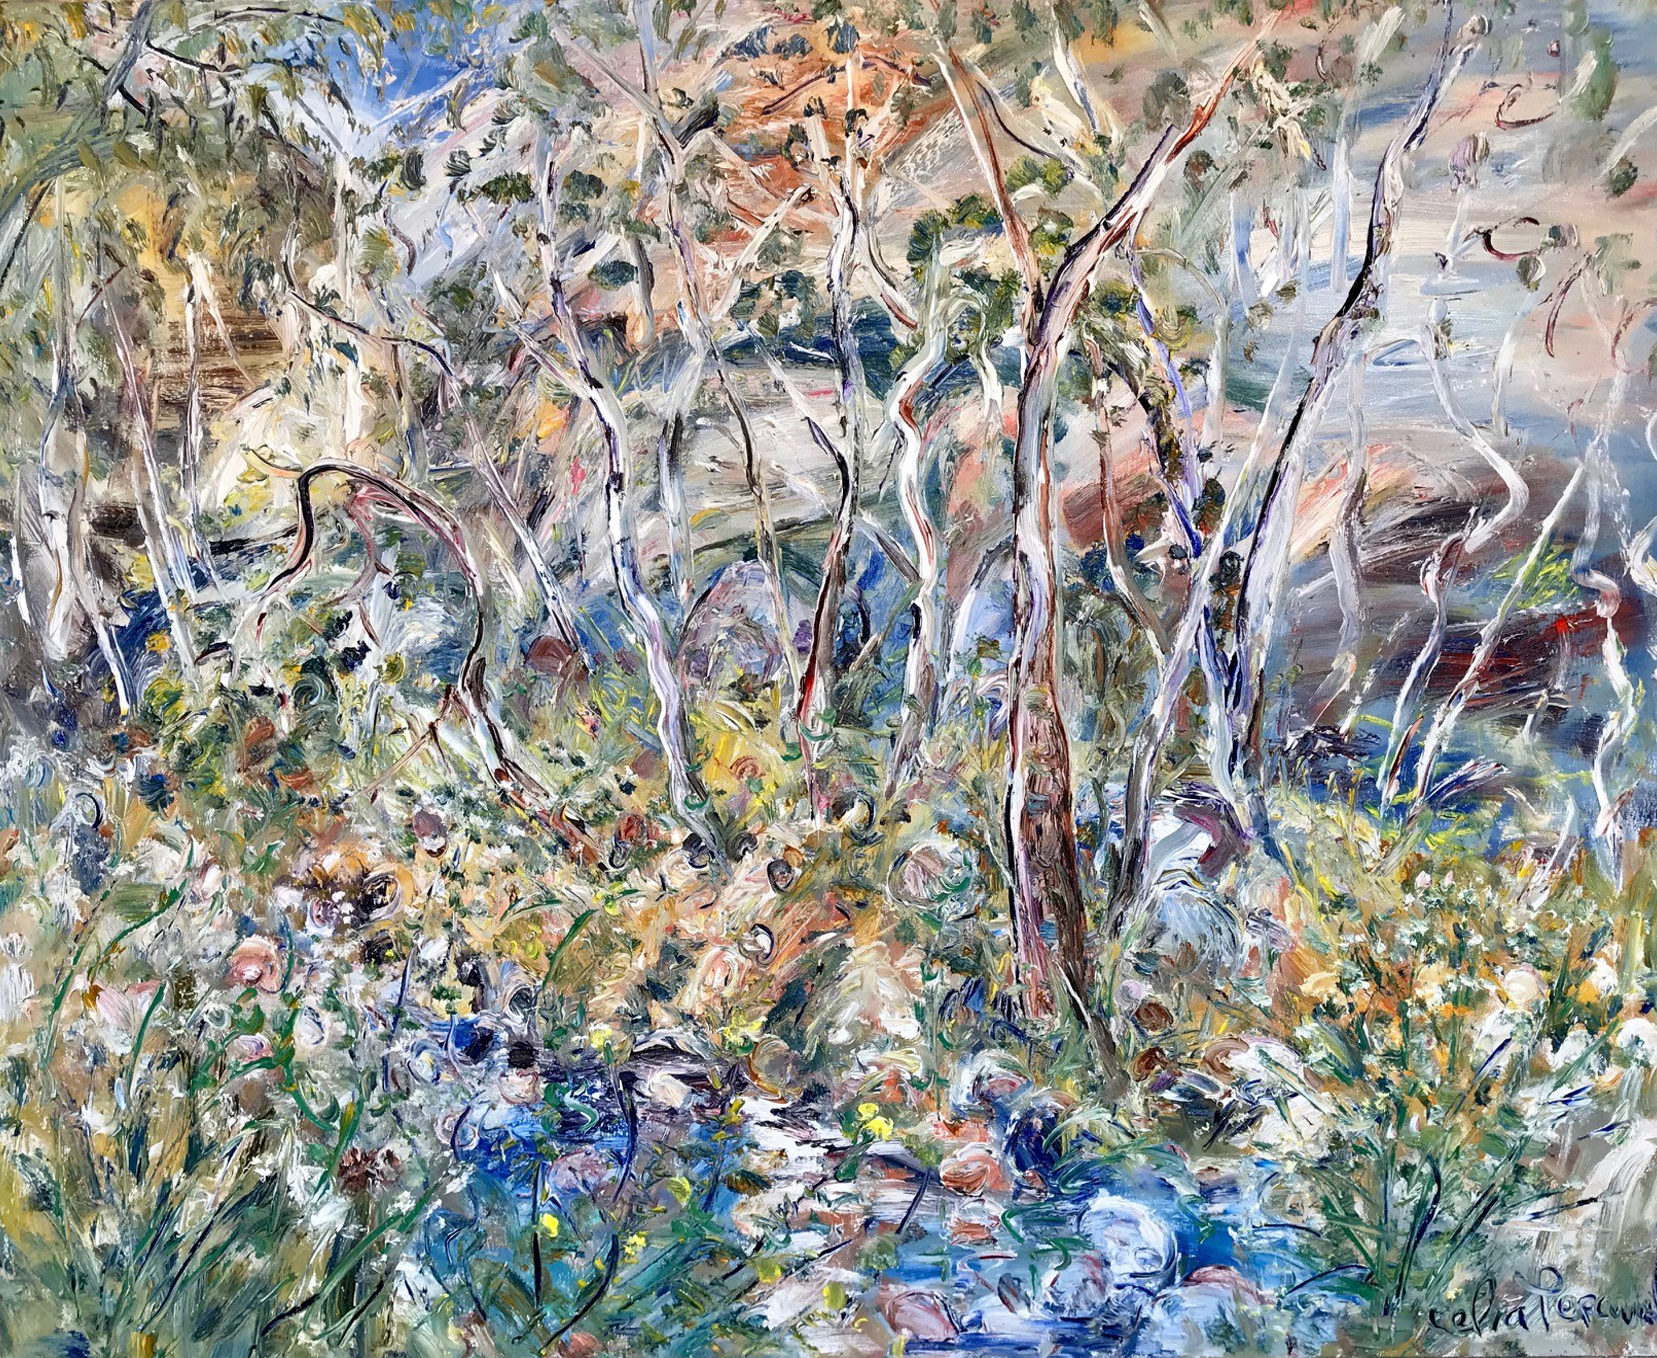 Celia Perceval 'White Cockatoos in the Gorge, Grampians' oil on canvas 102 x 123cm $20,800